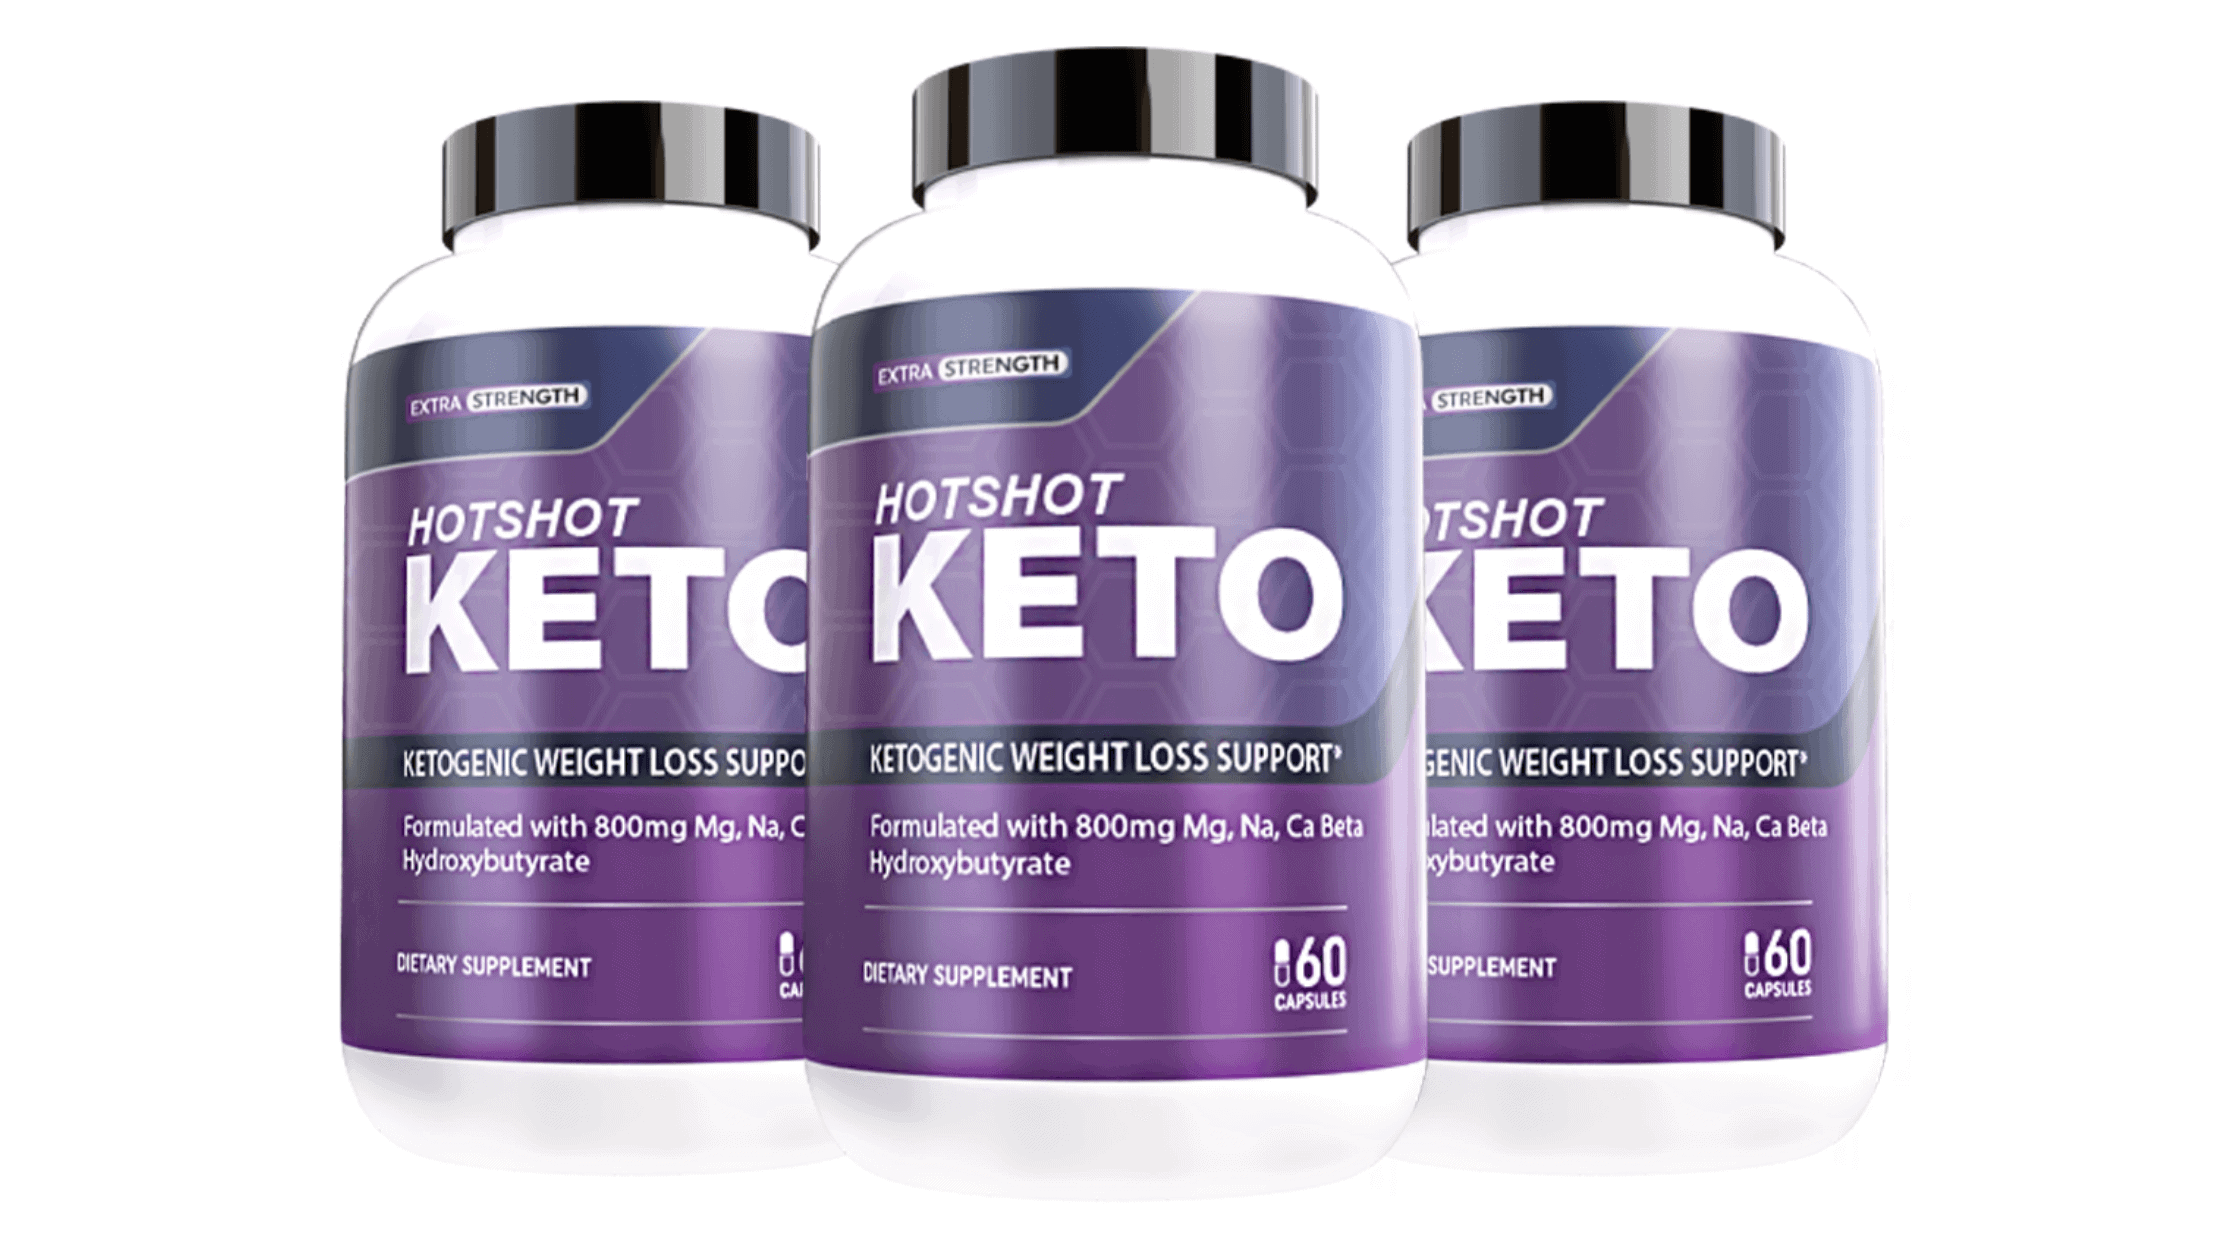 HotShot Go Keto supplement